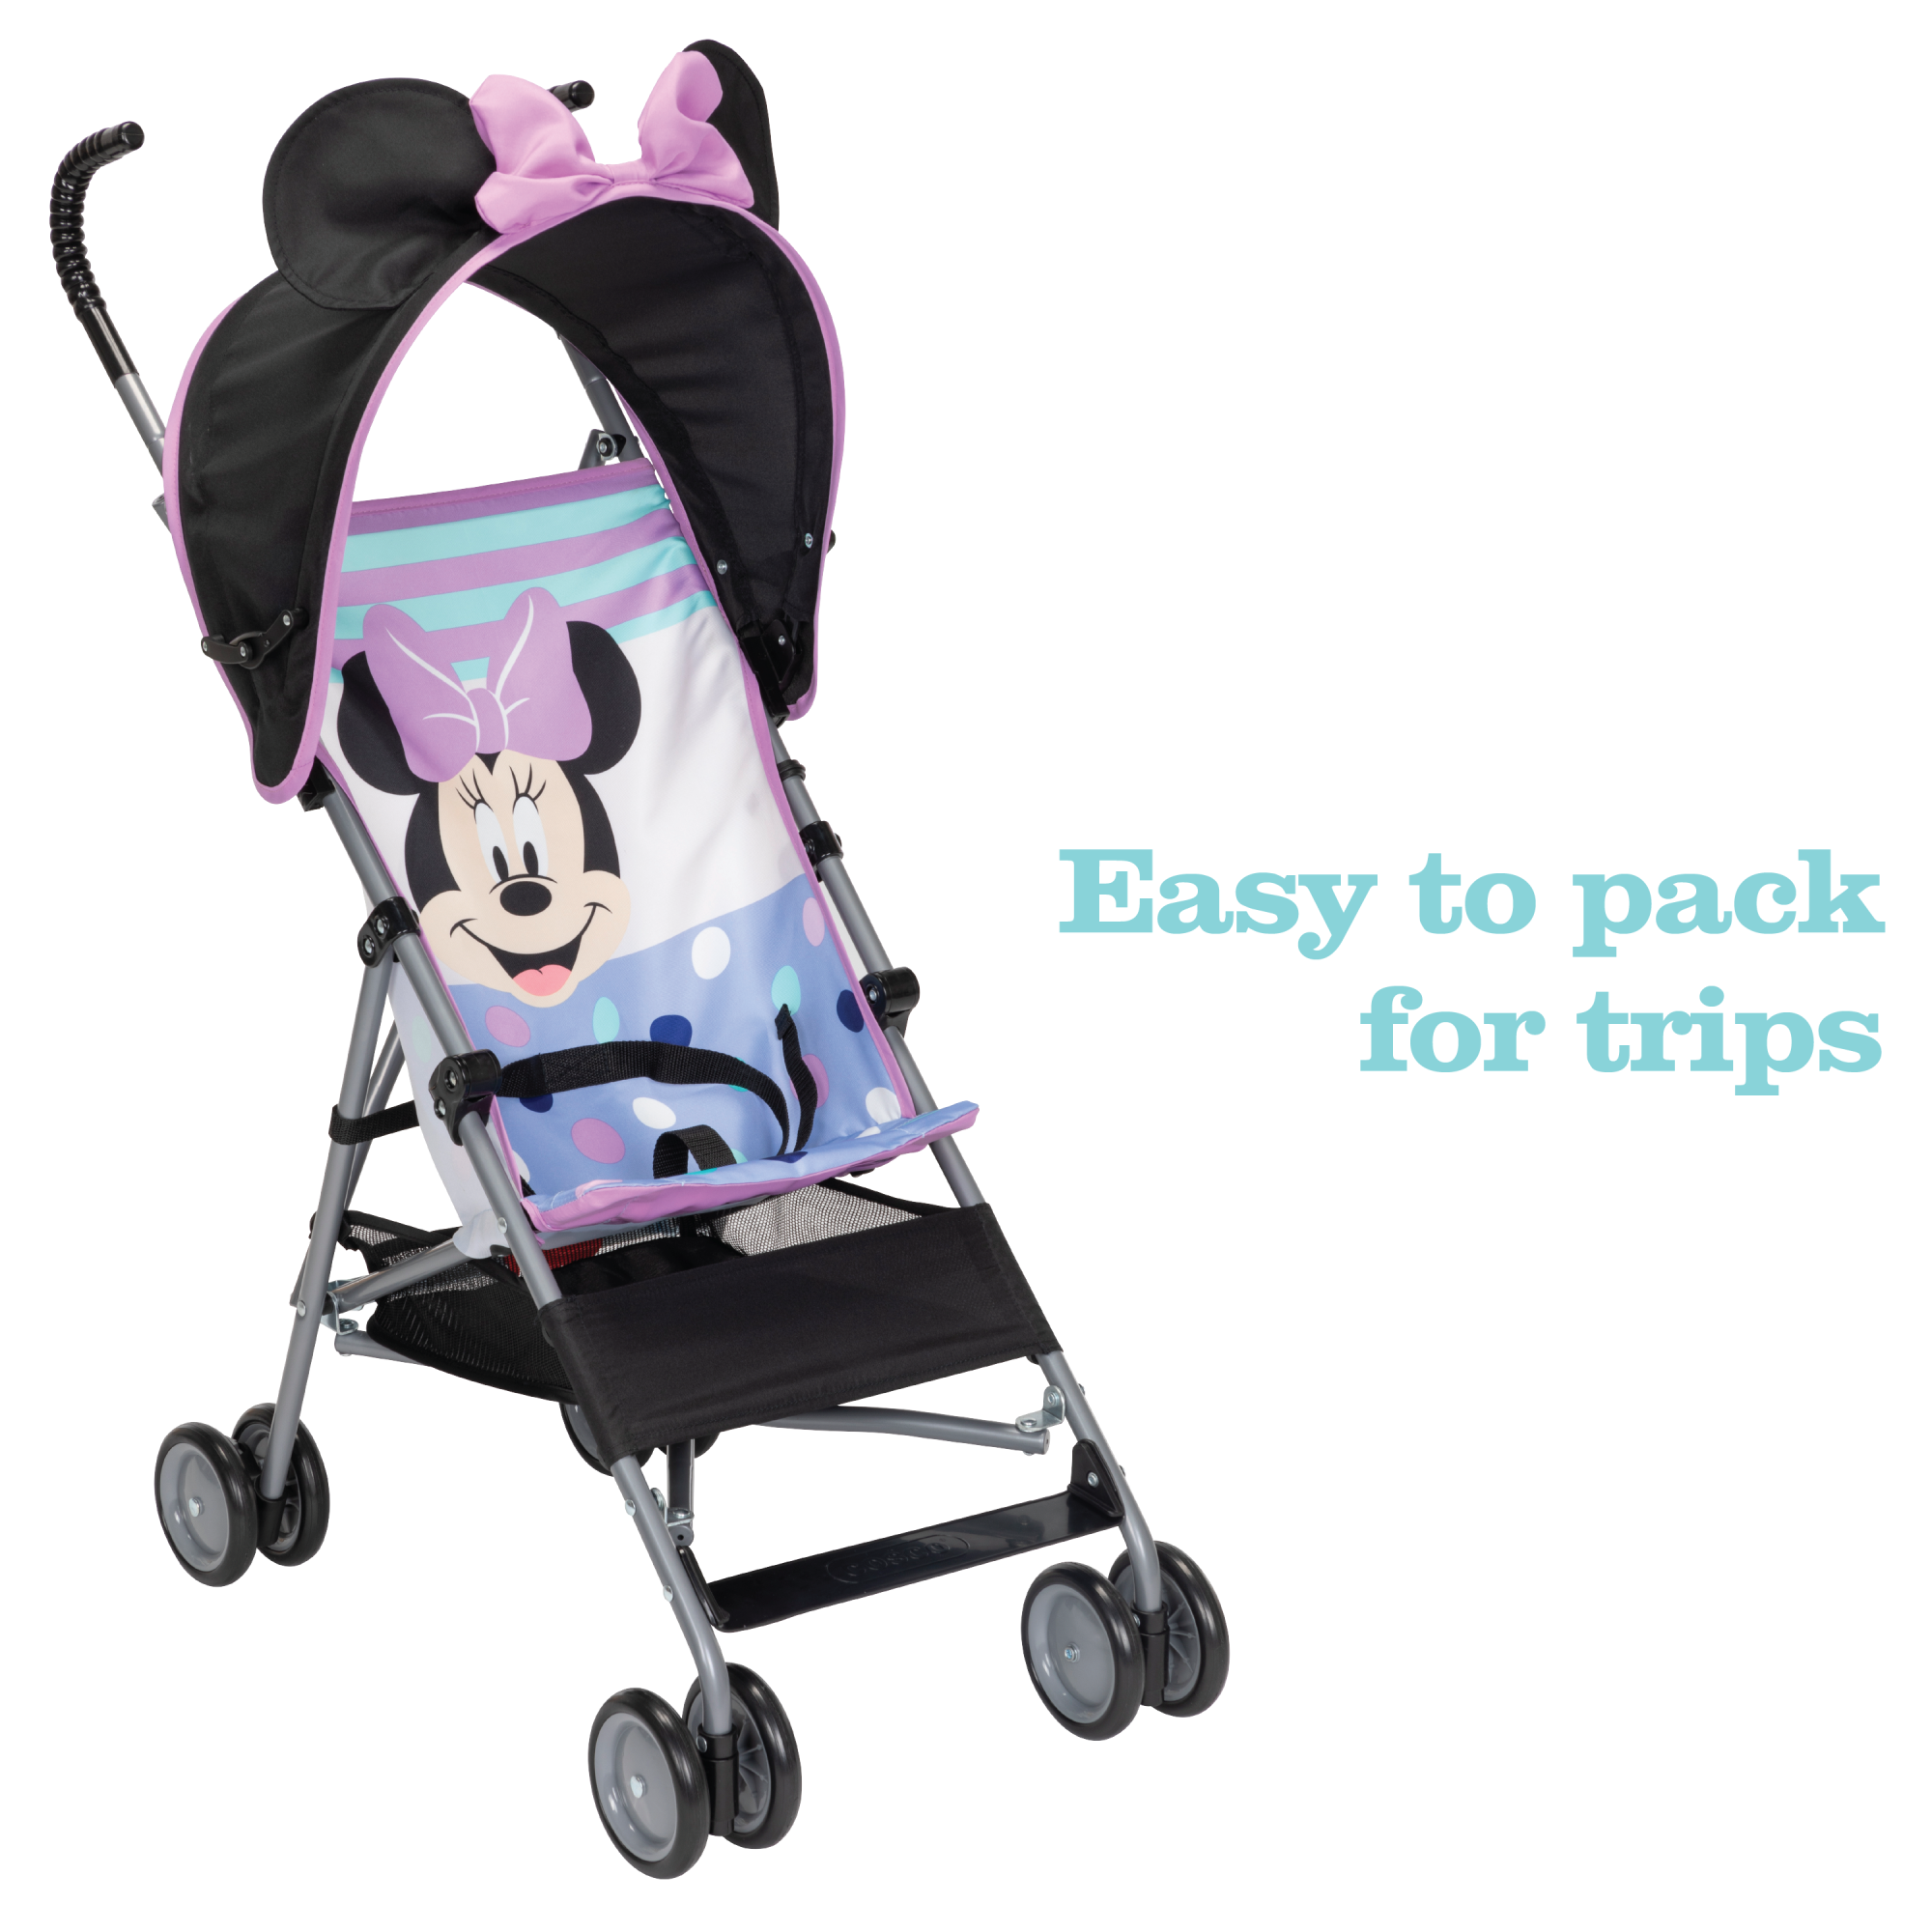 Disney Baby Character Umbrella Stroller - footrest for little one's comfort